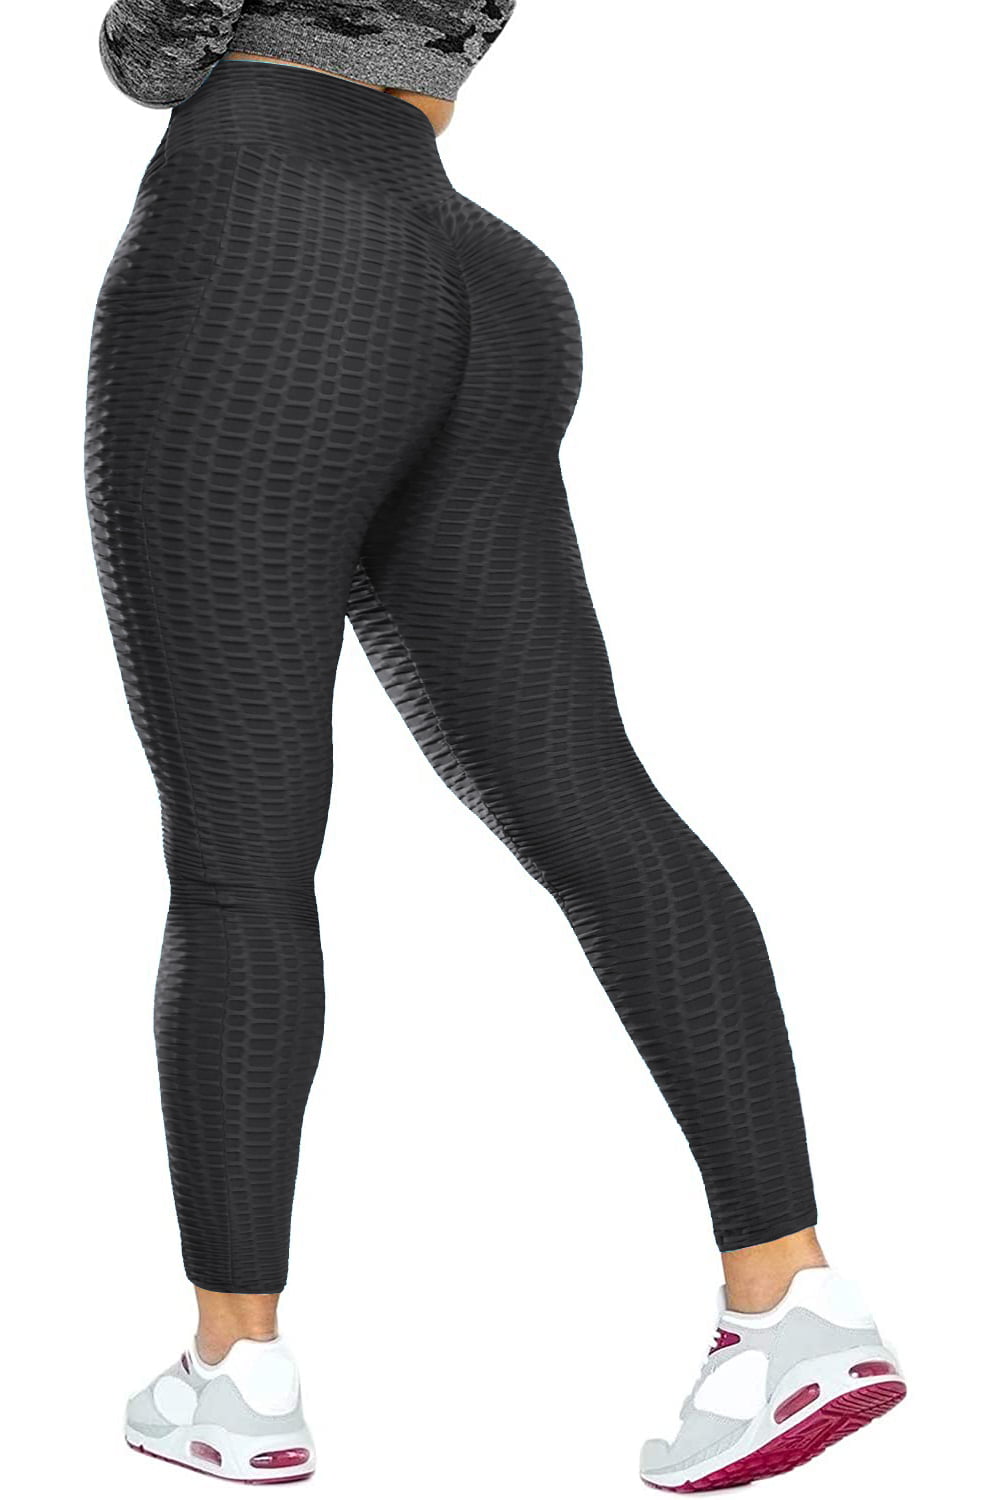 Anti-Cellulite Women High Waist Yoga Pants Fitness Gym Leggings Scrunch Trousers 